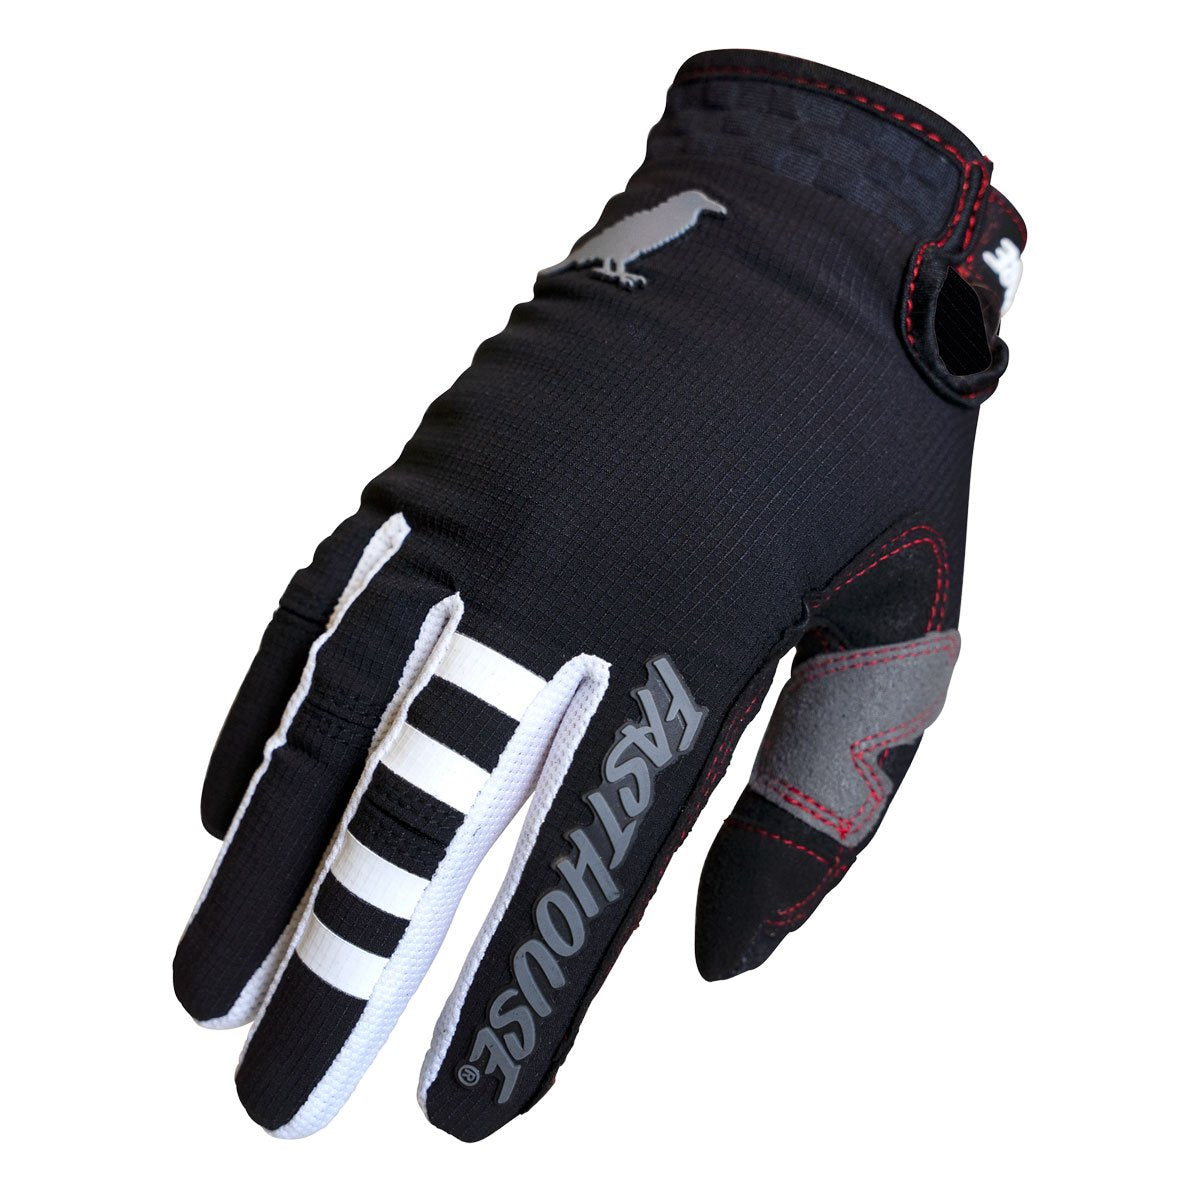 Elrod Air Glove - Black